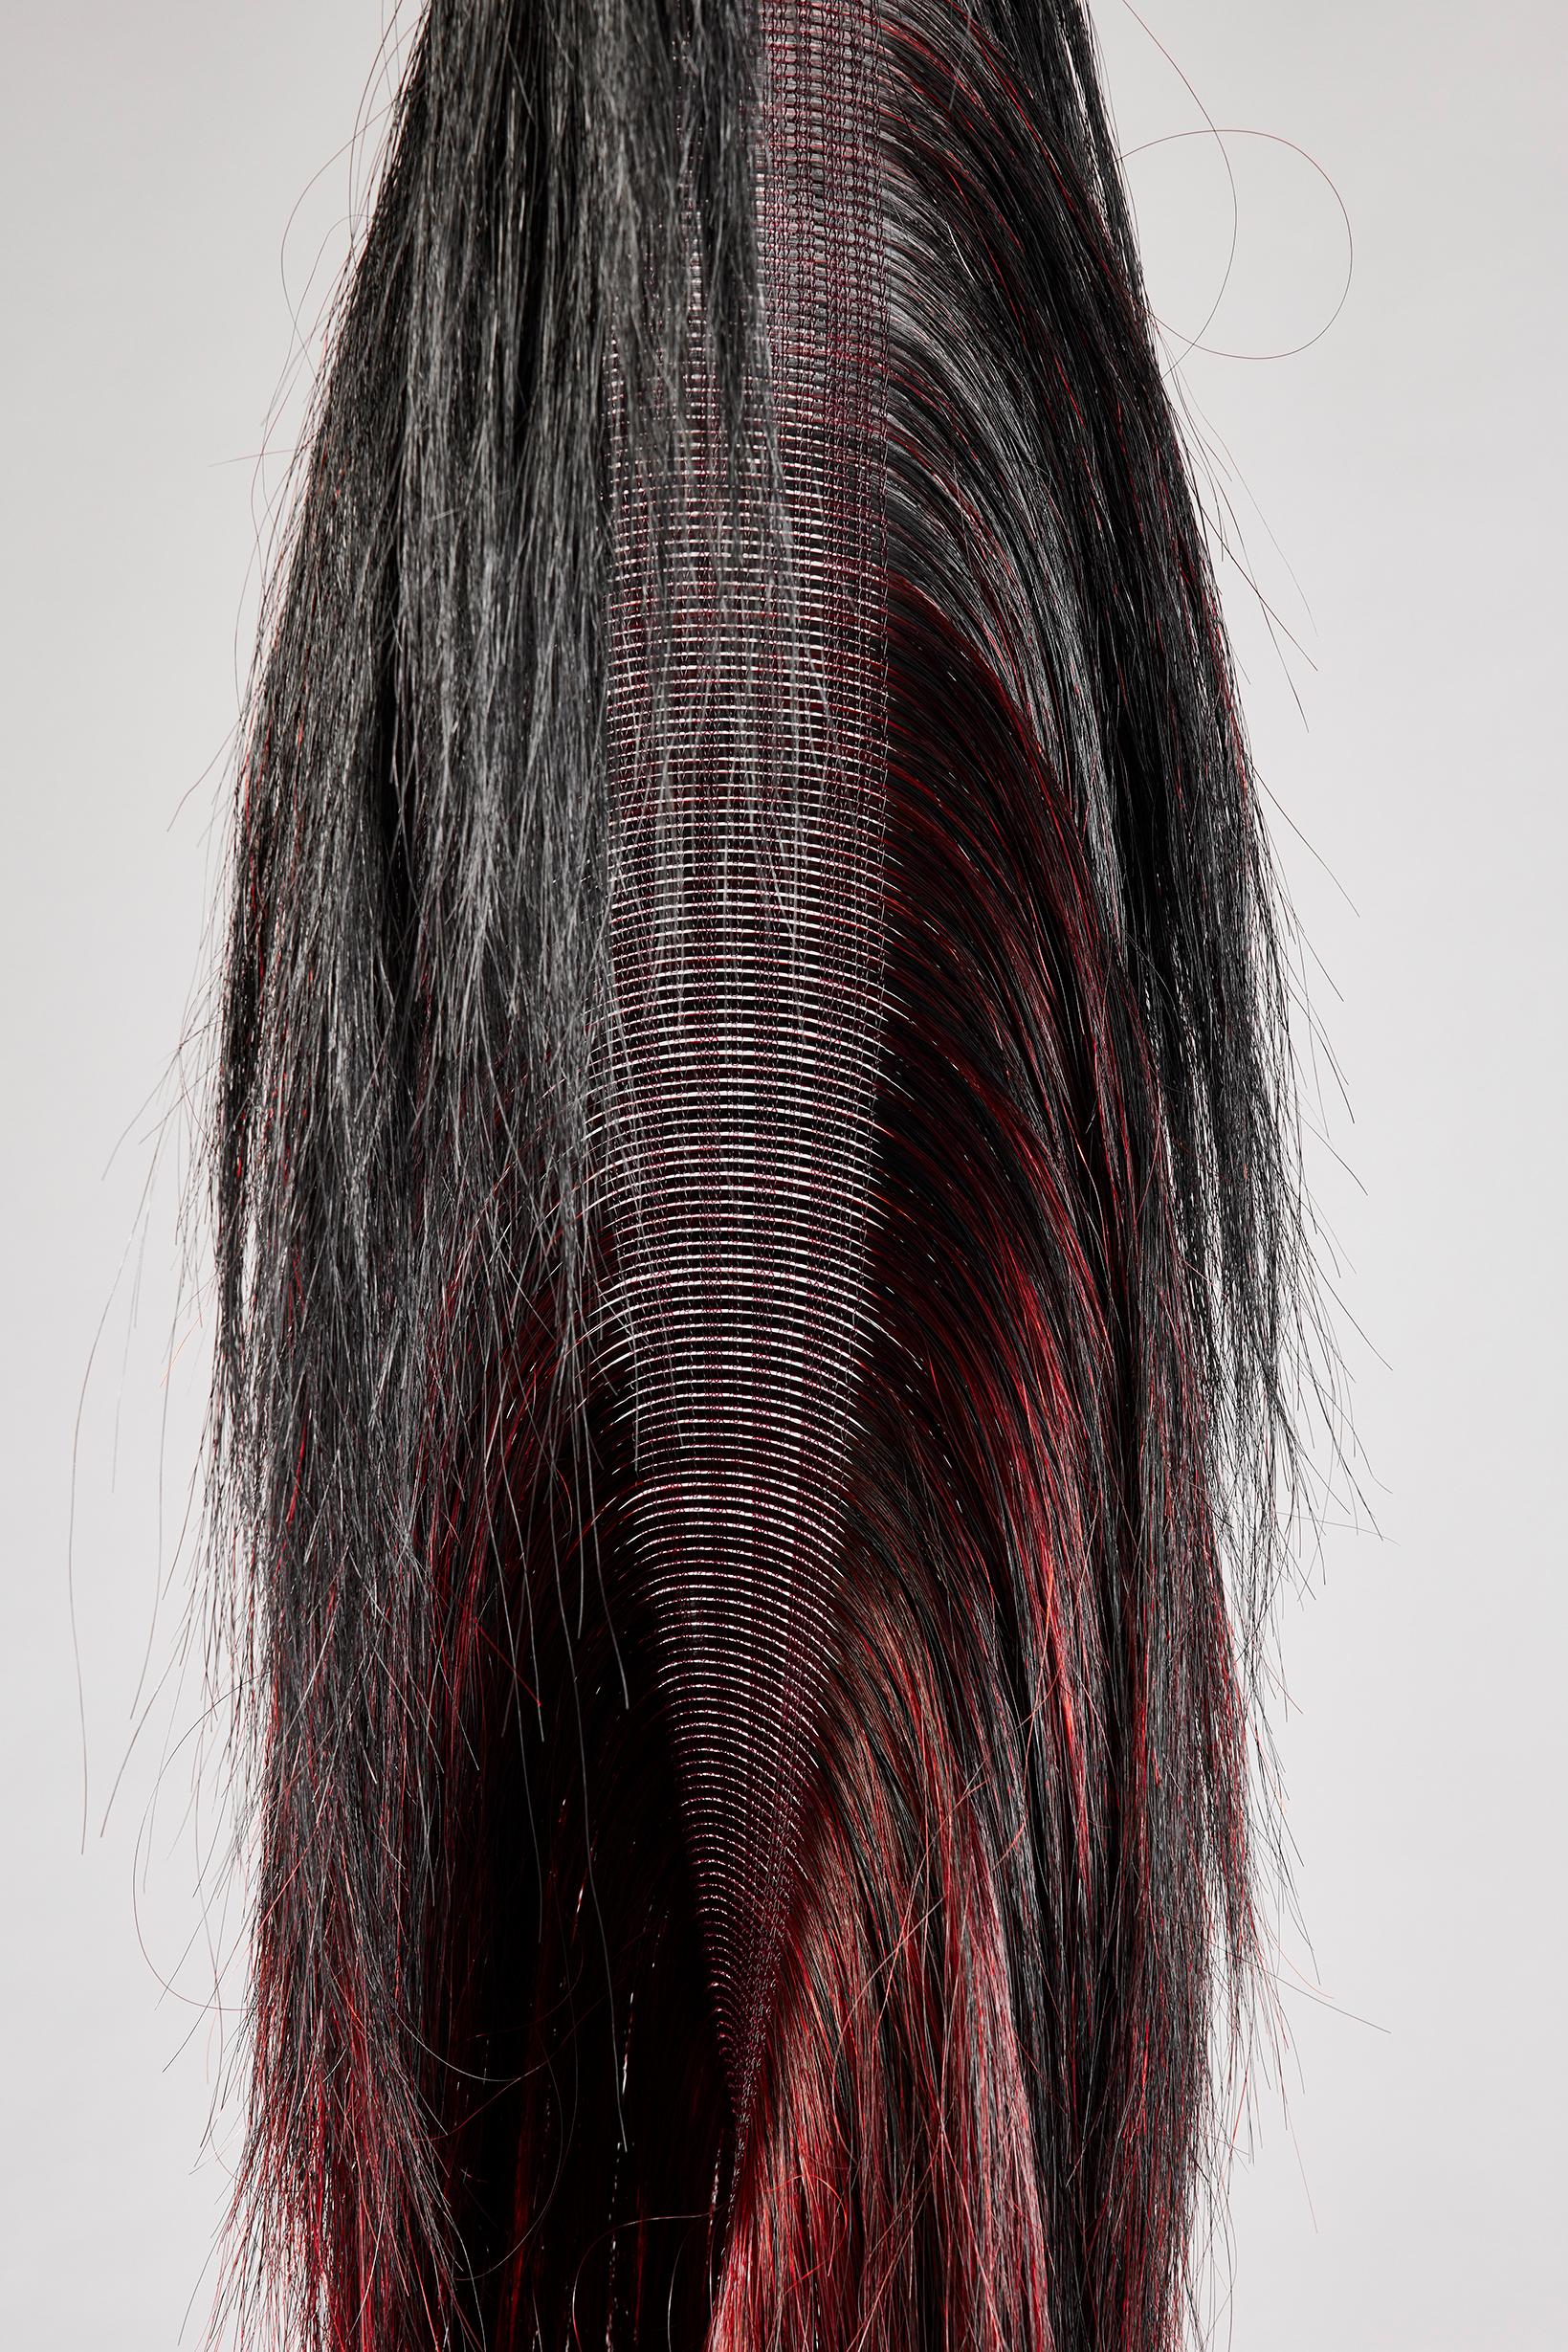 European Présence Black Rubis, Horsehair and Nylon sculpture by Ulrika Lljedahl For Sale